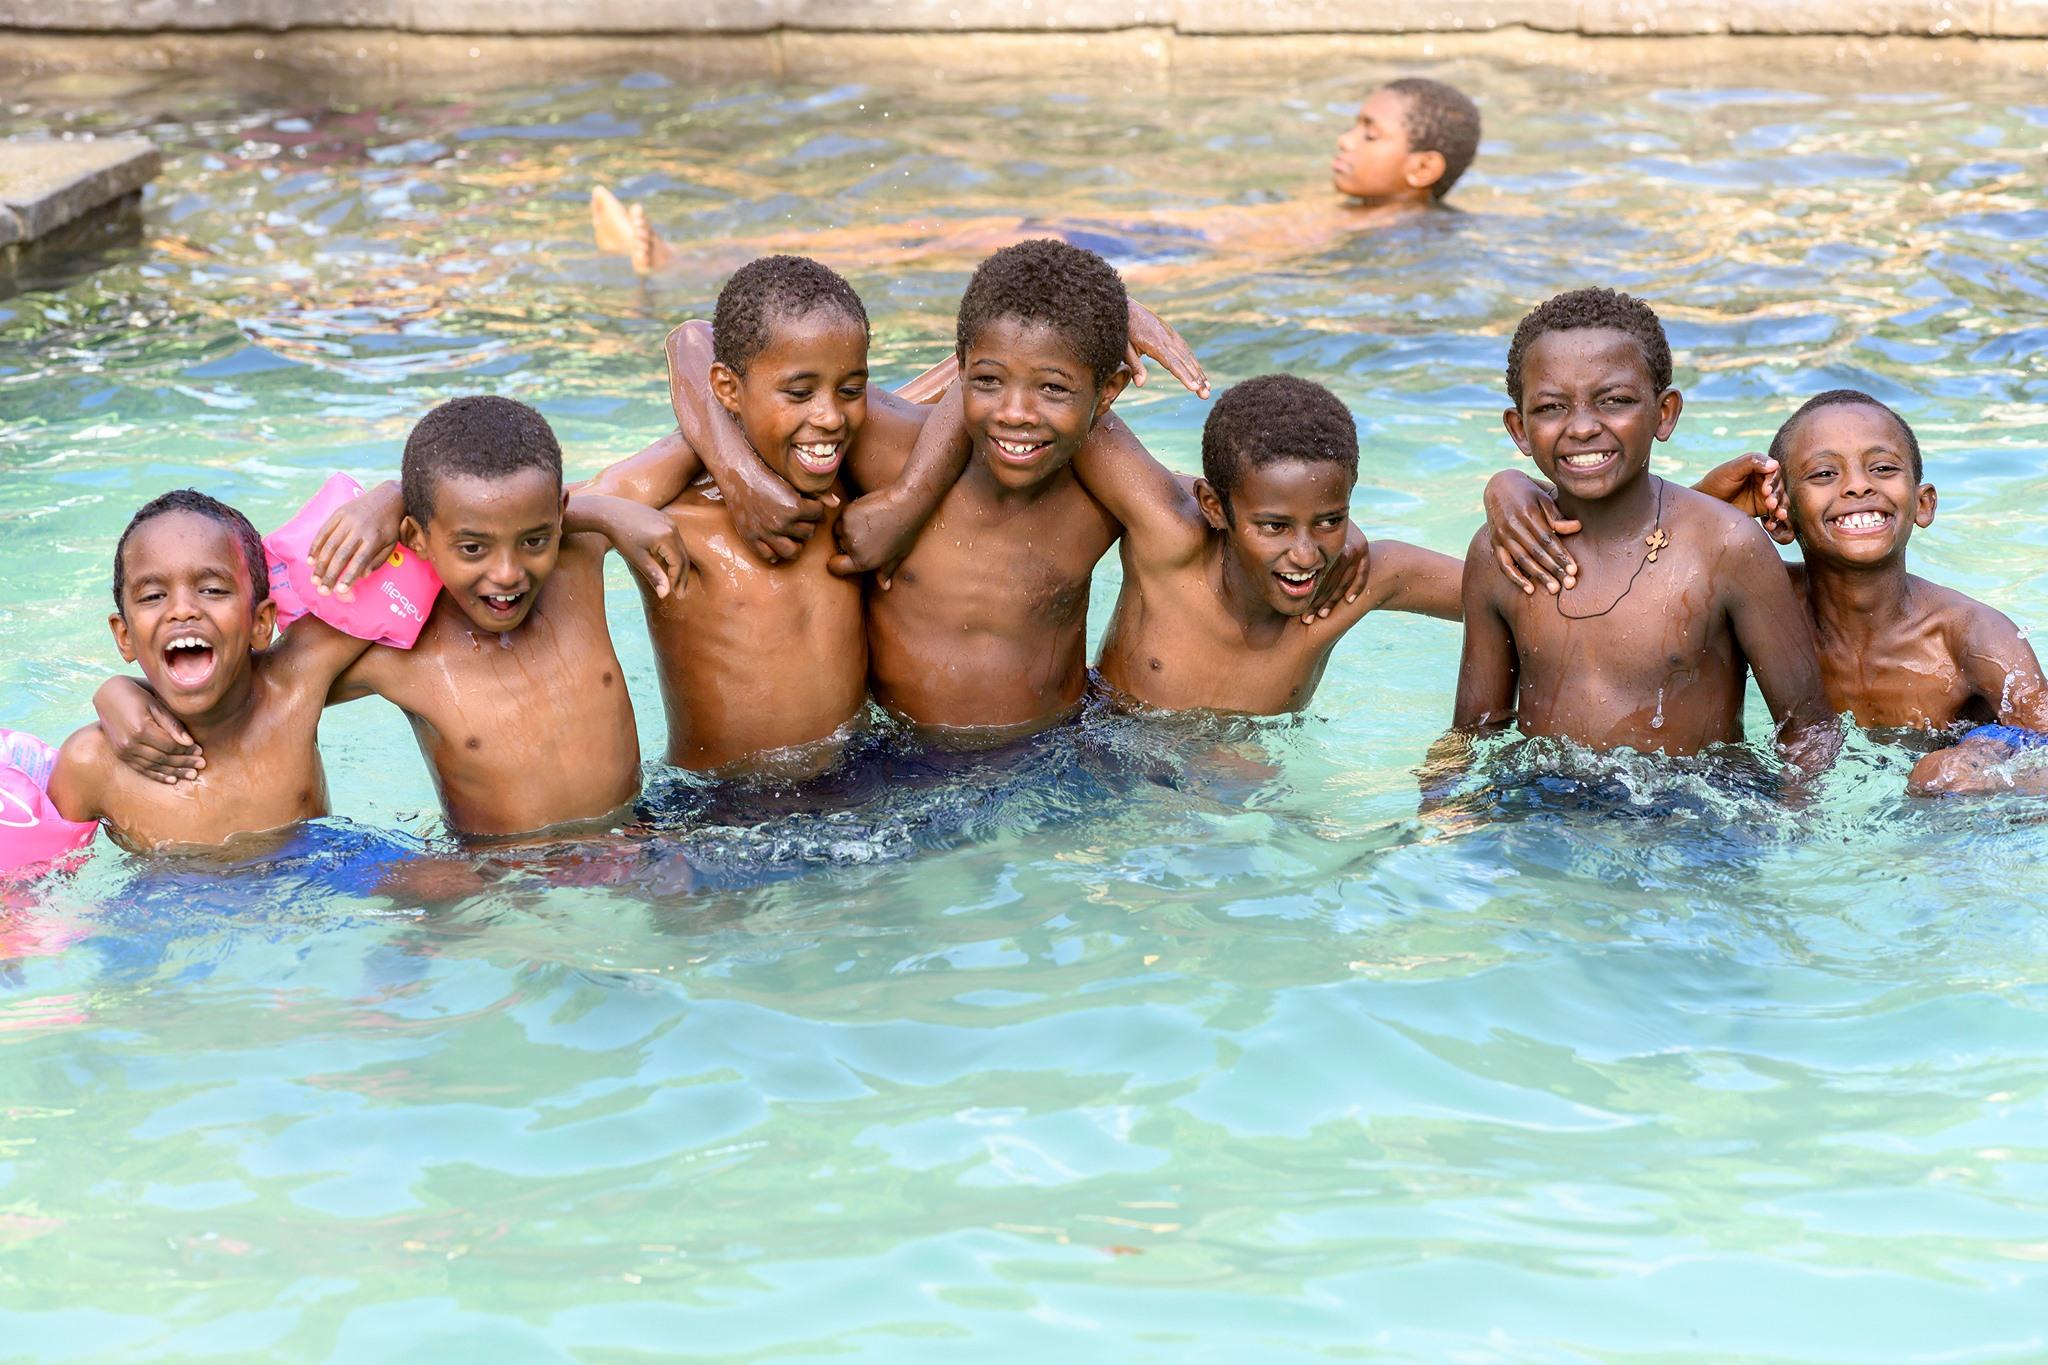 Beautiful Together, Orphanage Outings, Swimming in Ethiopia, Tamara Lackey, Nikon